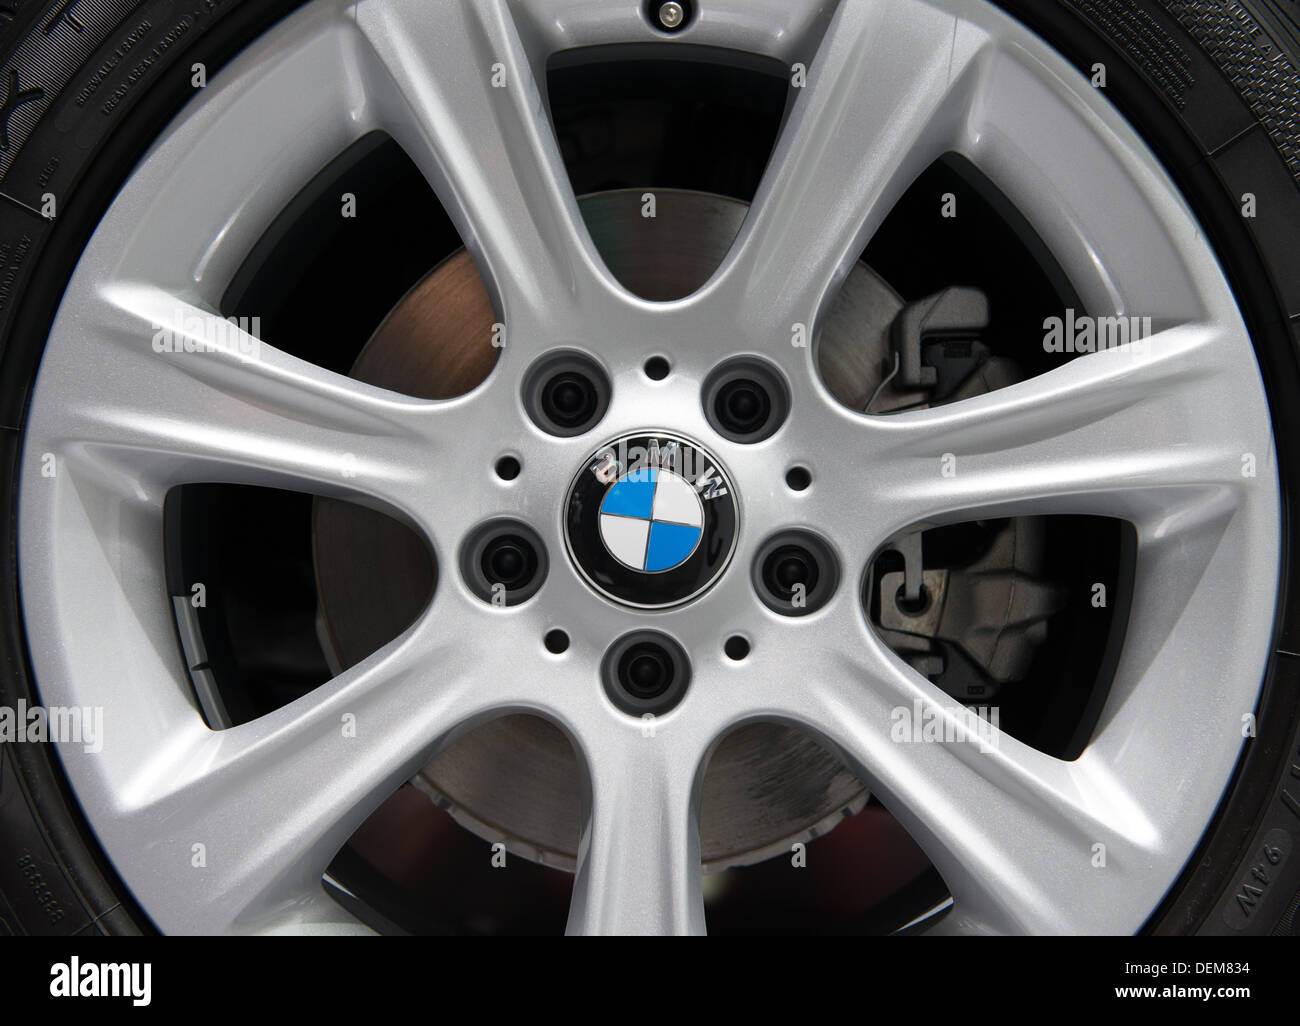 FRANKFURT - SEPT 16: Aluminium Wheel On A BMW Car at the 65th IAA (Internationale Automobil Ausstellung) Stock Photo